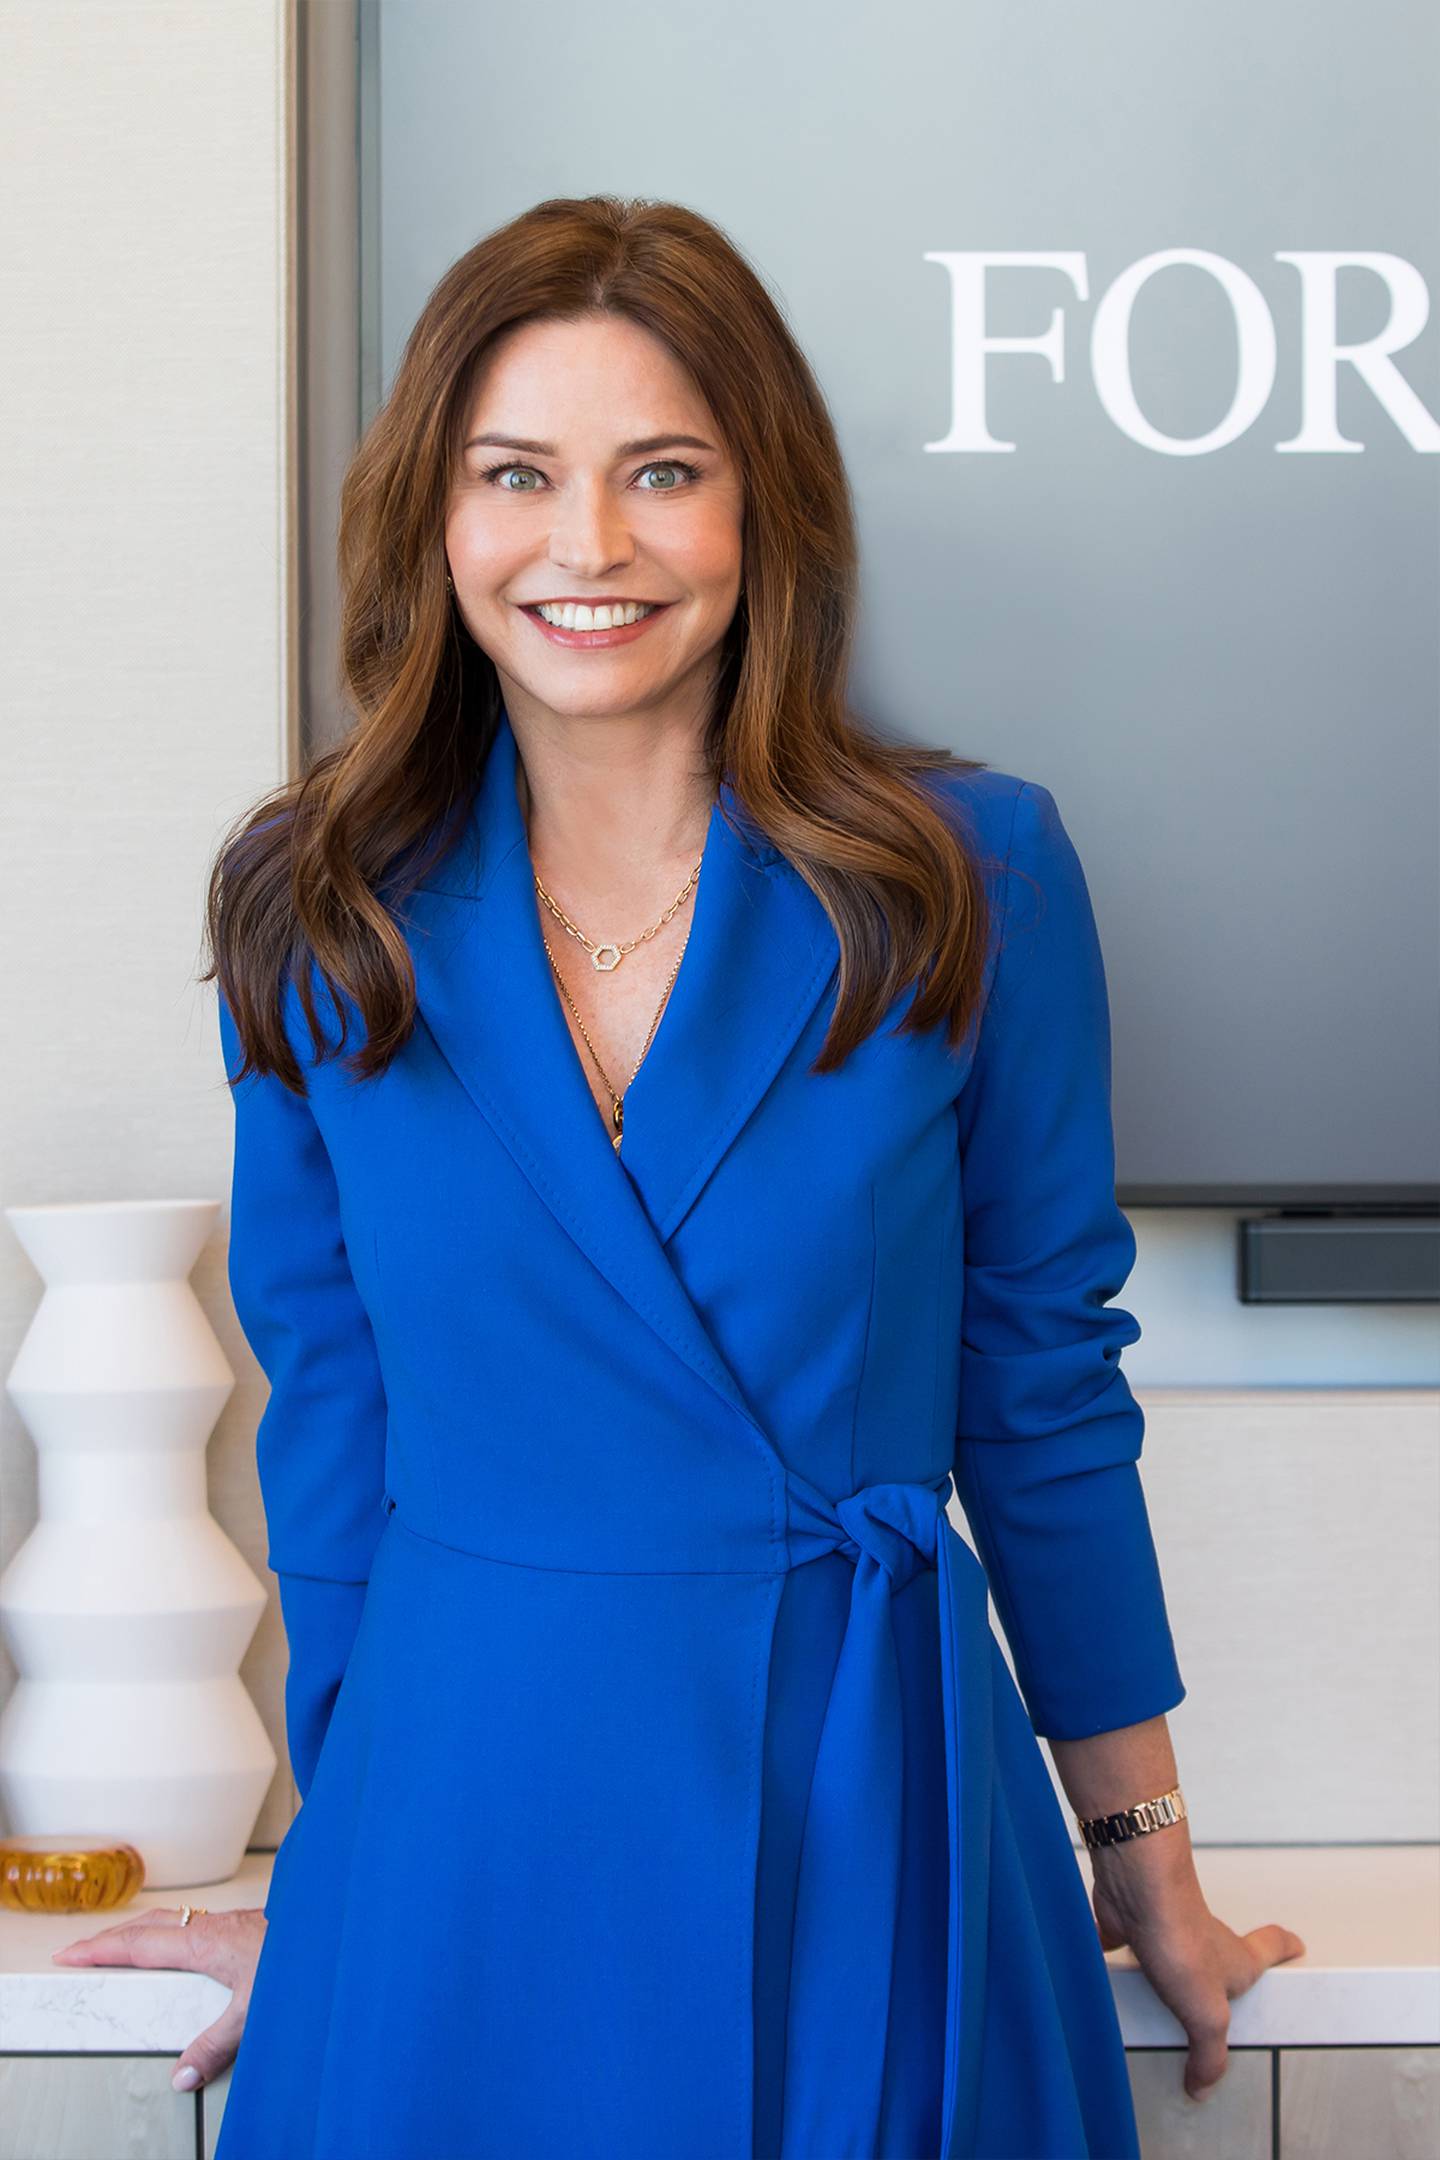 Kirsten Green - founder and managing partner of venture capital firm Forerunner.